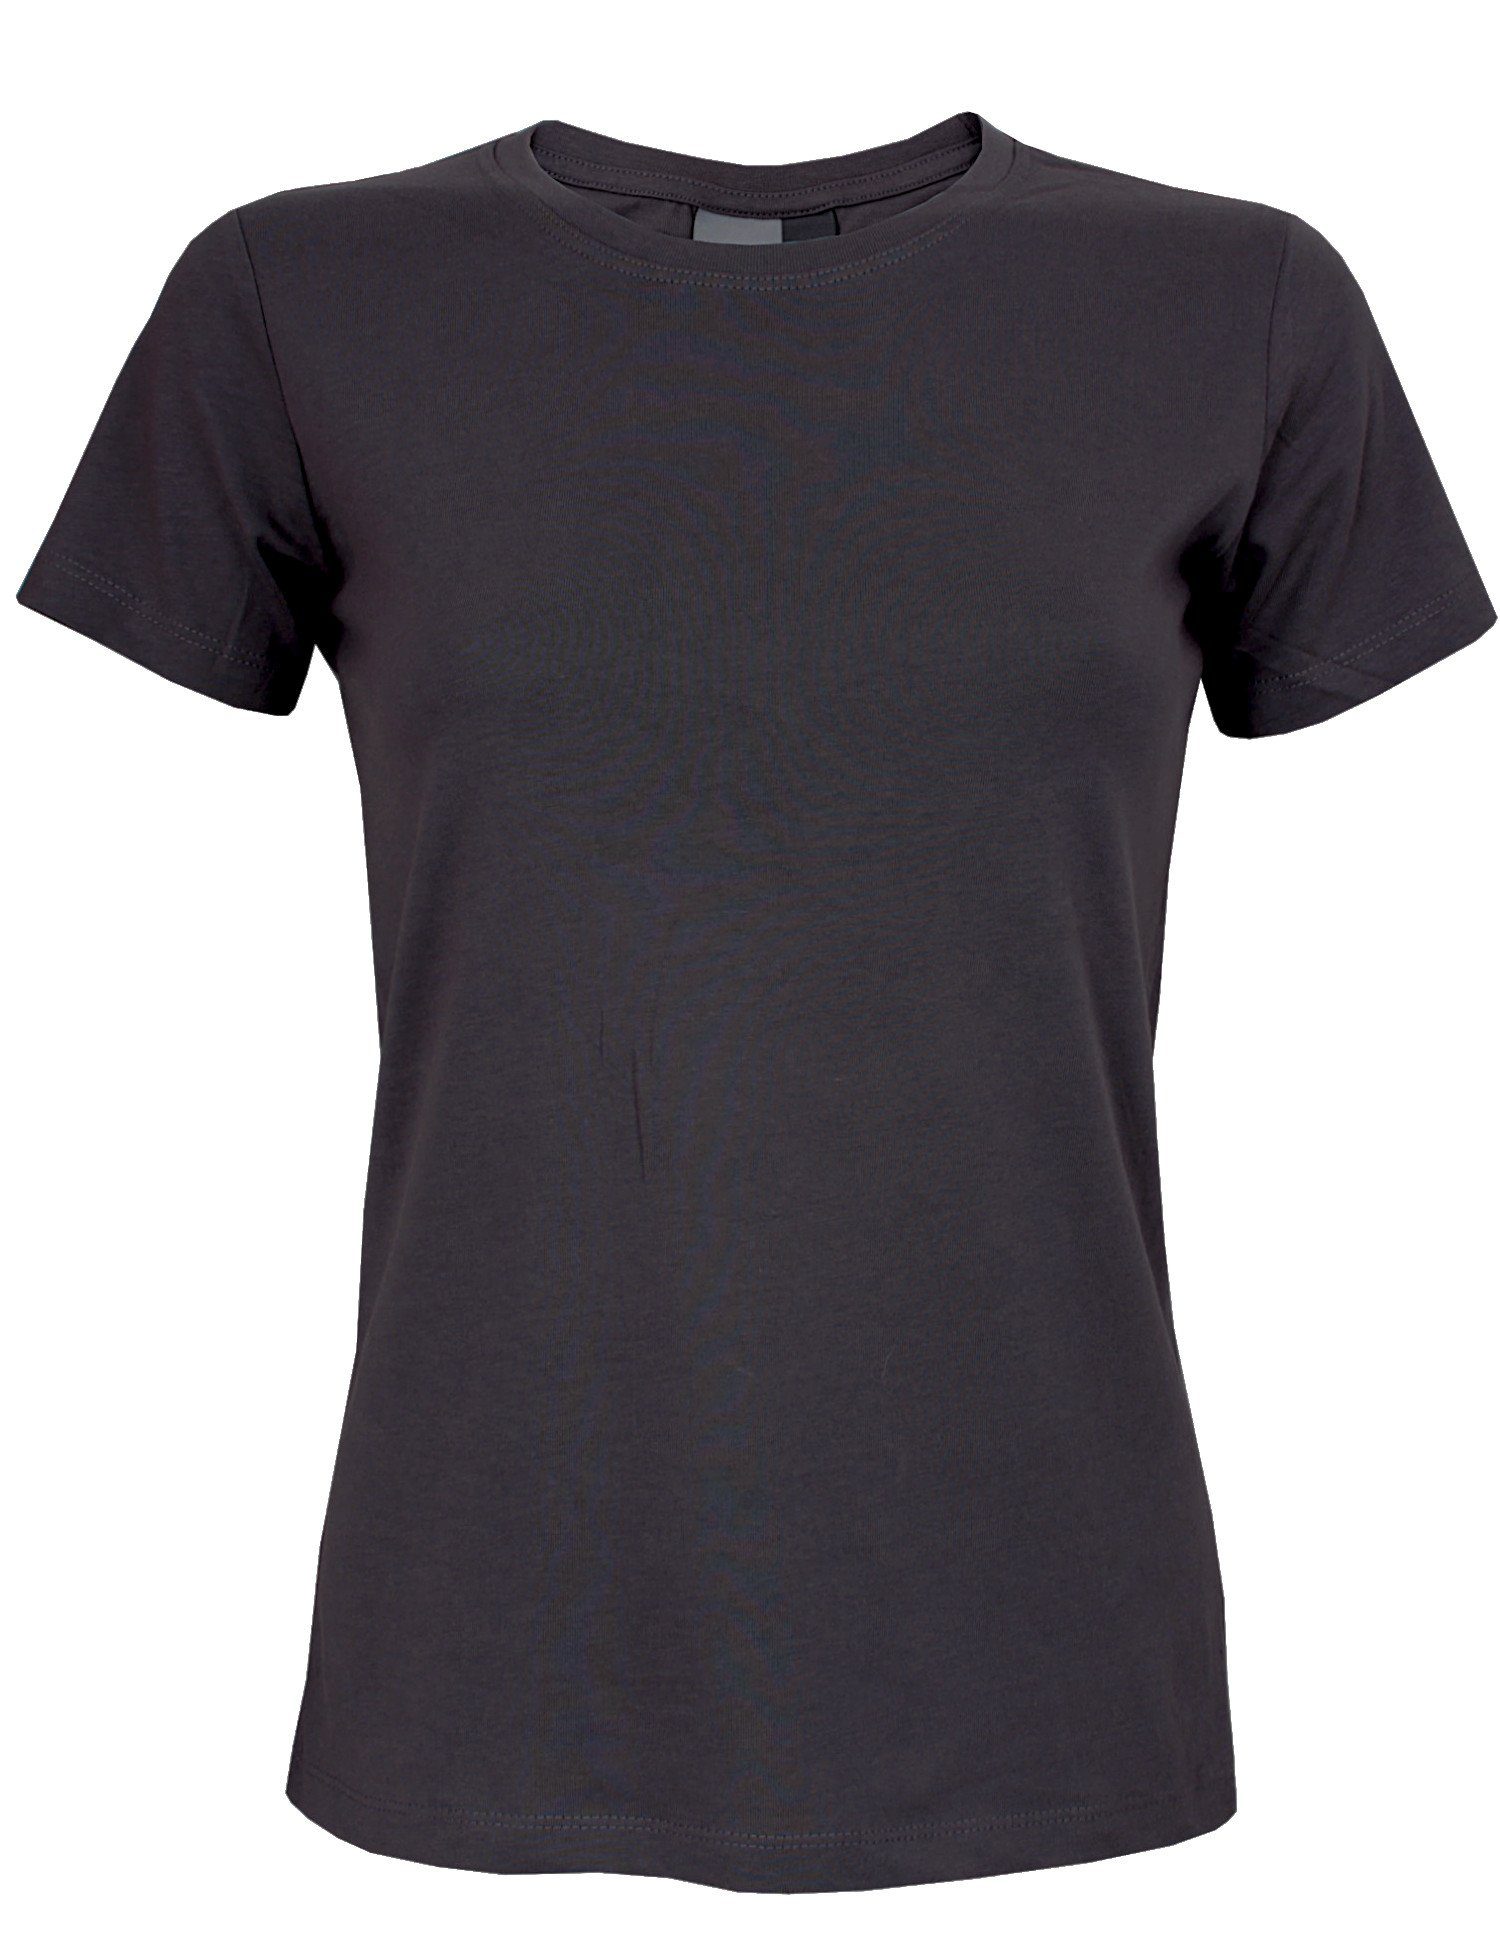 Promodoro Rundhalsshirt Women’s Premium-Shirt Unifarben graphite